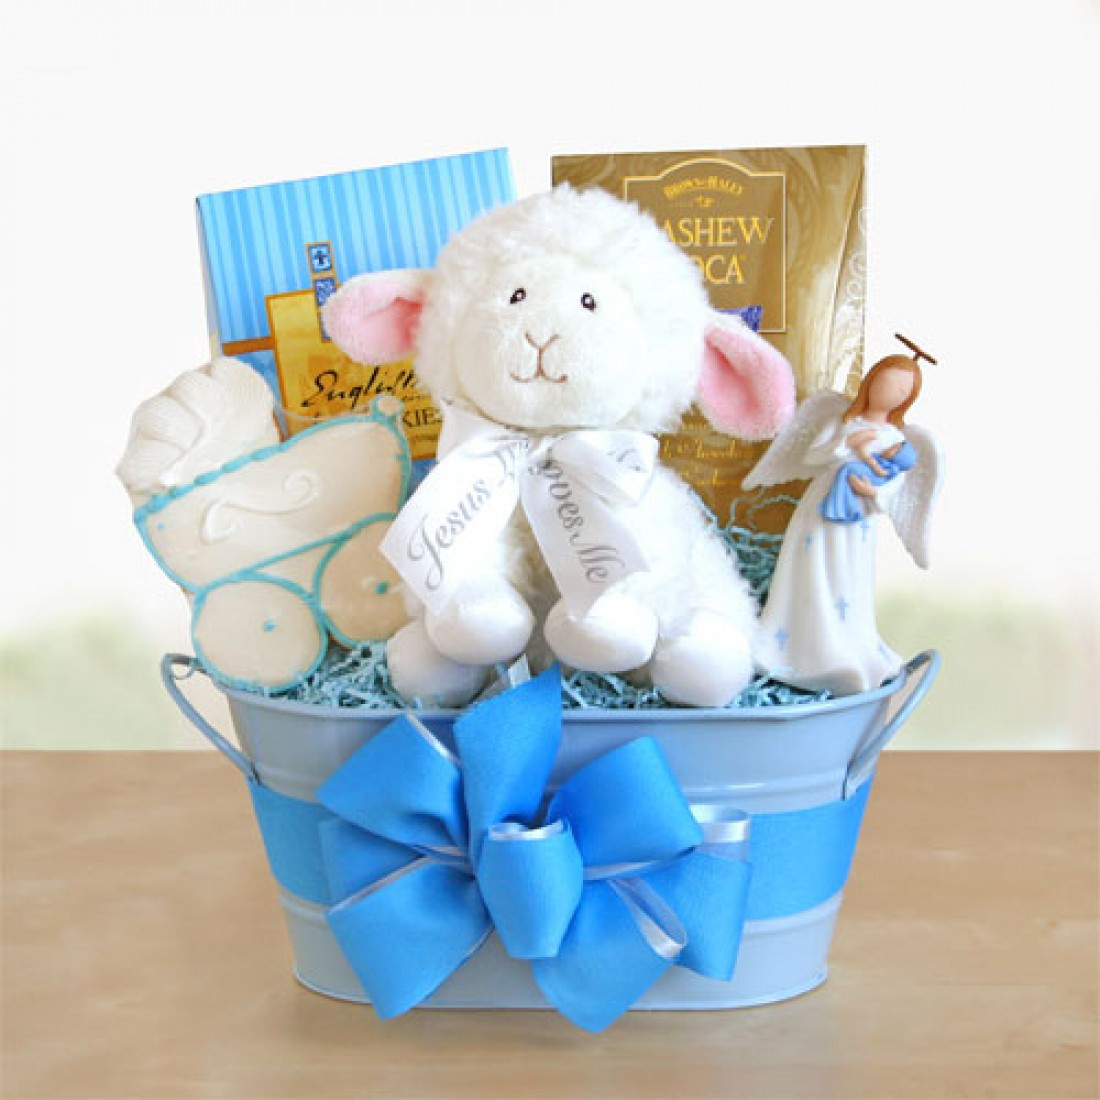 Christening Gift Ideas For Baby Boy
 Blue Boy Christening Gift Baskets